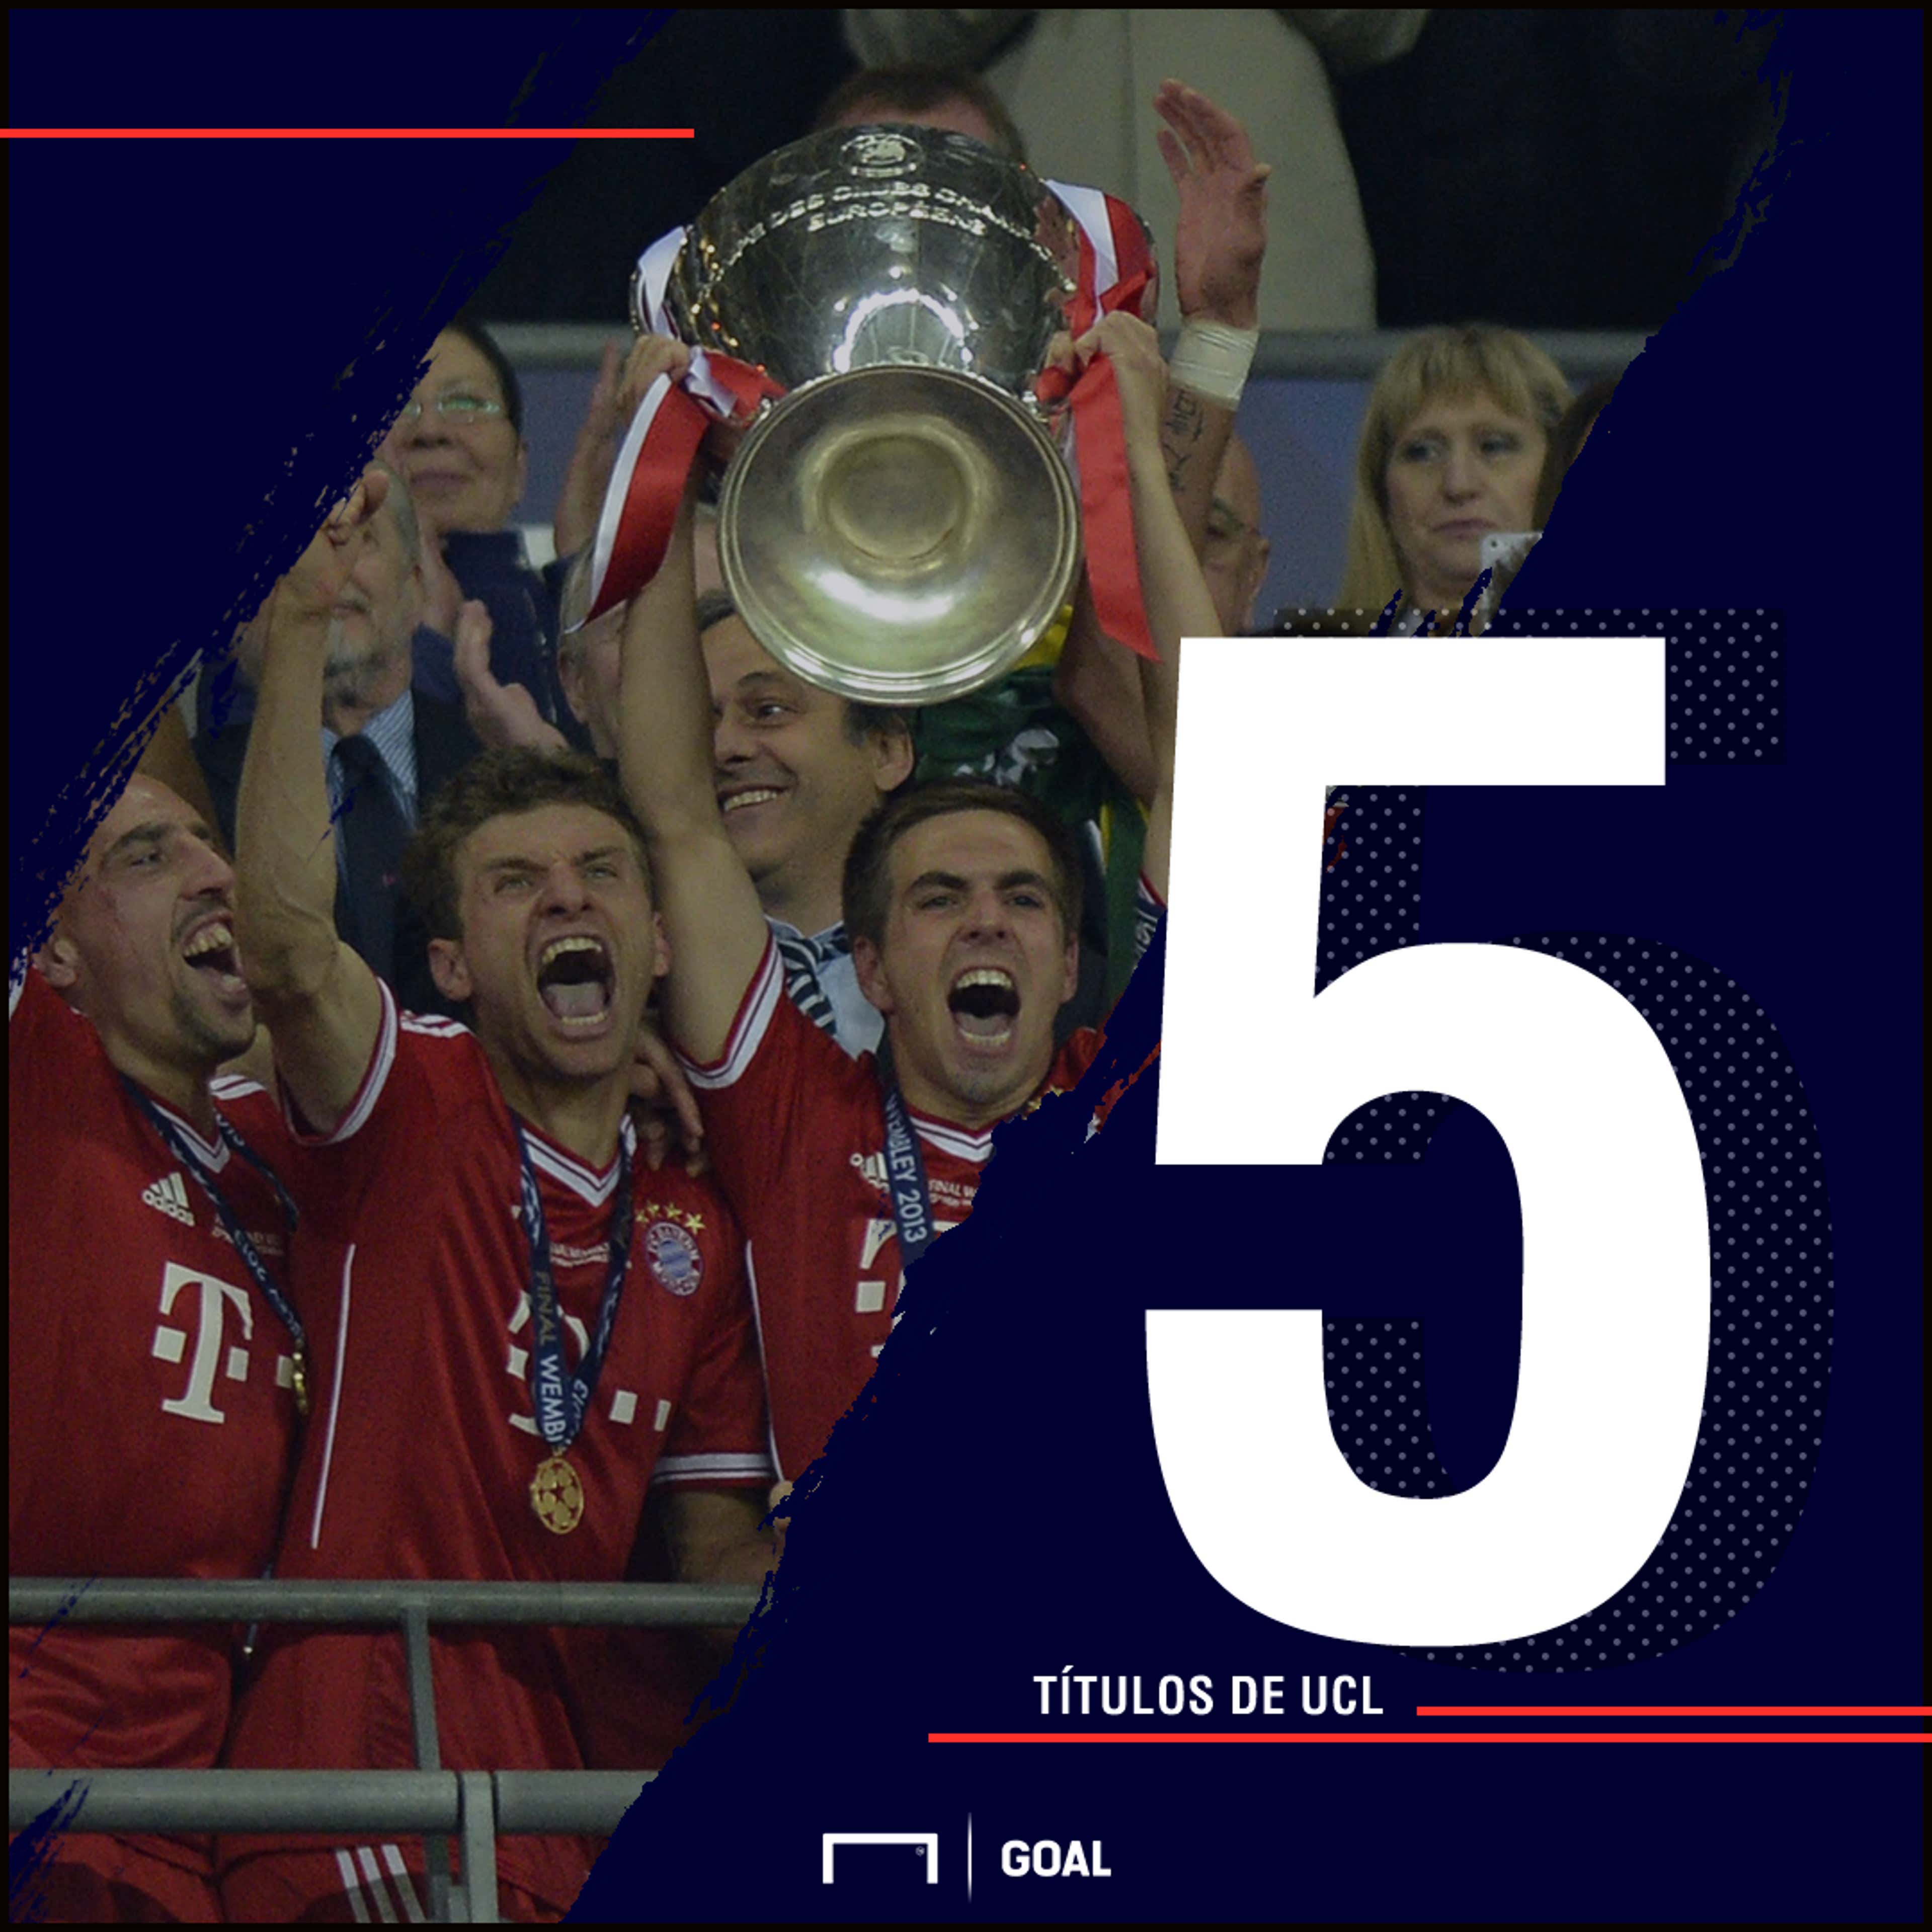 Bayern de Munique na Champions League: nove finais, seis títulos